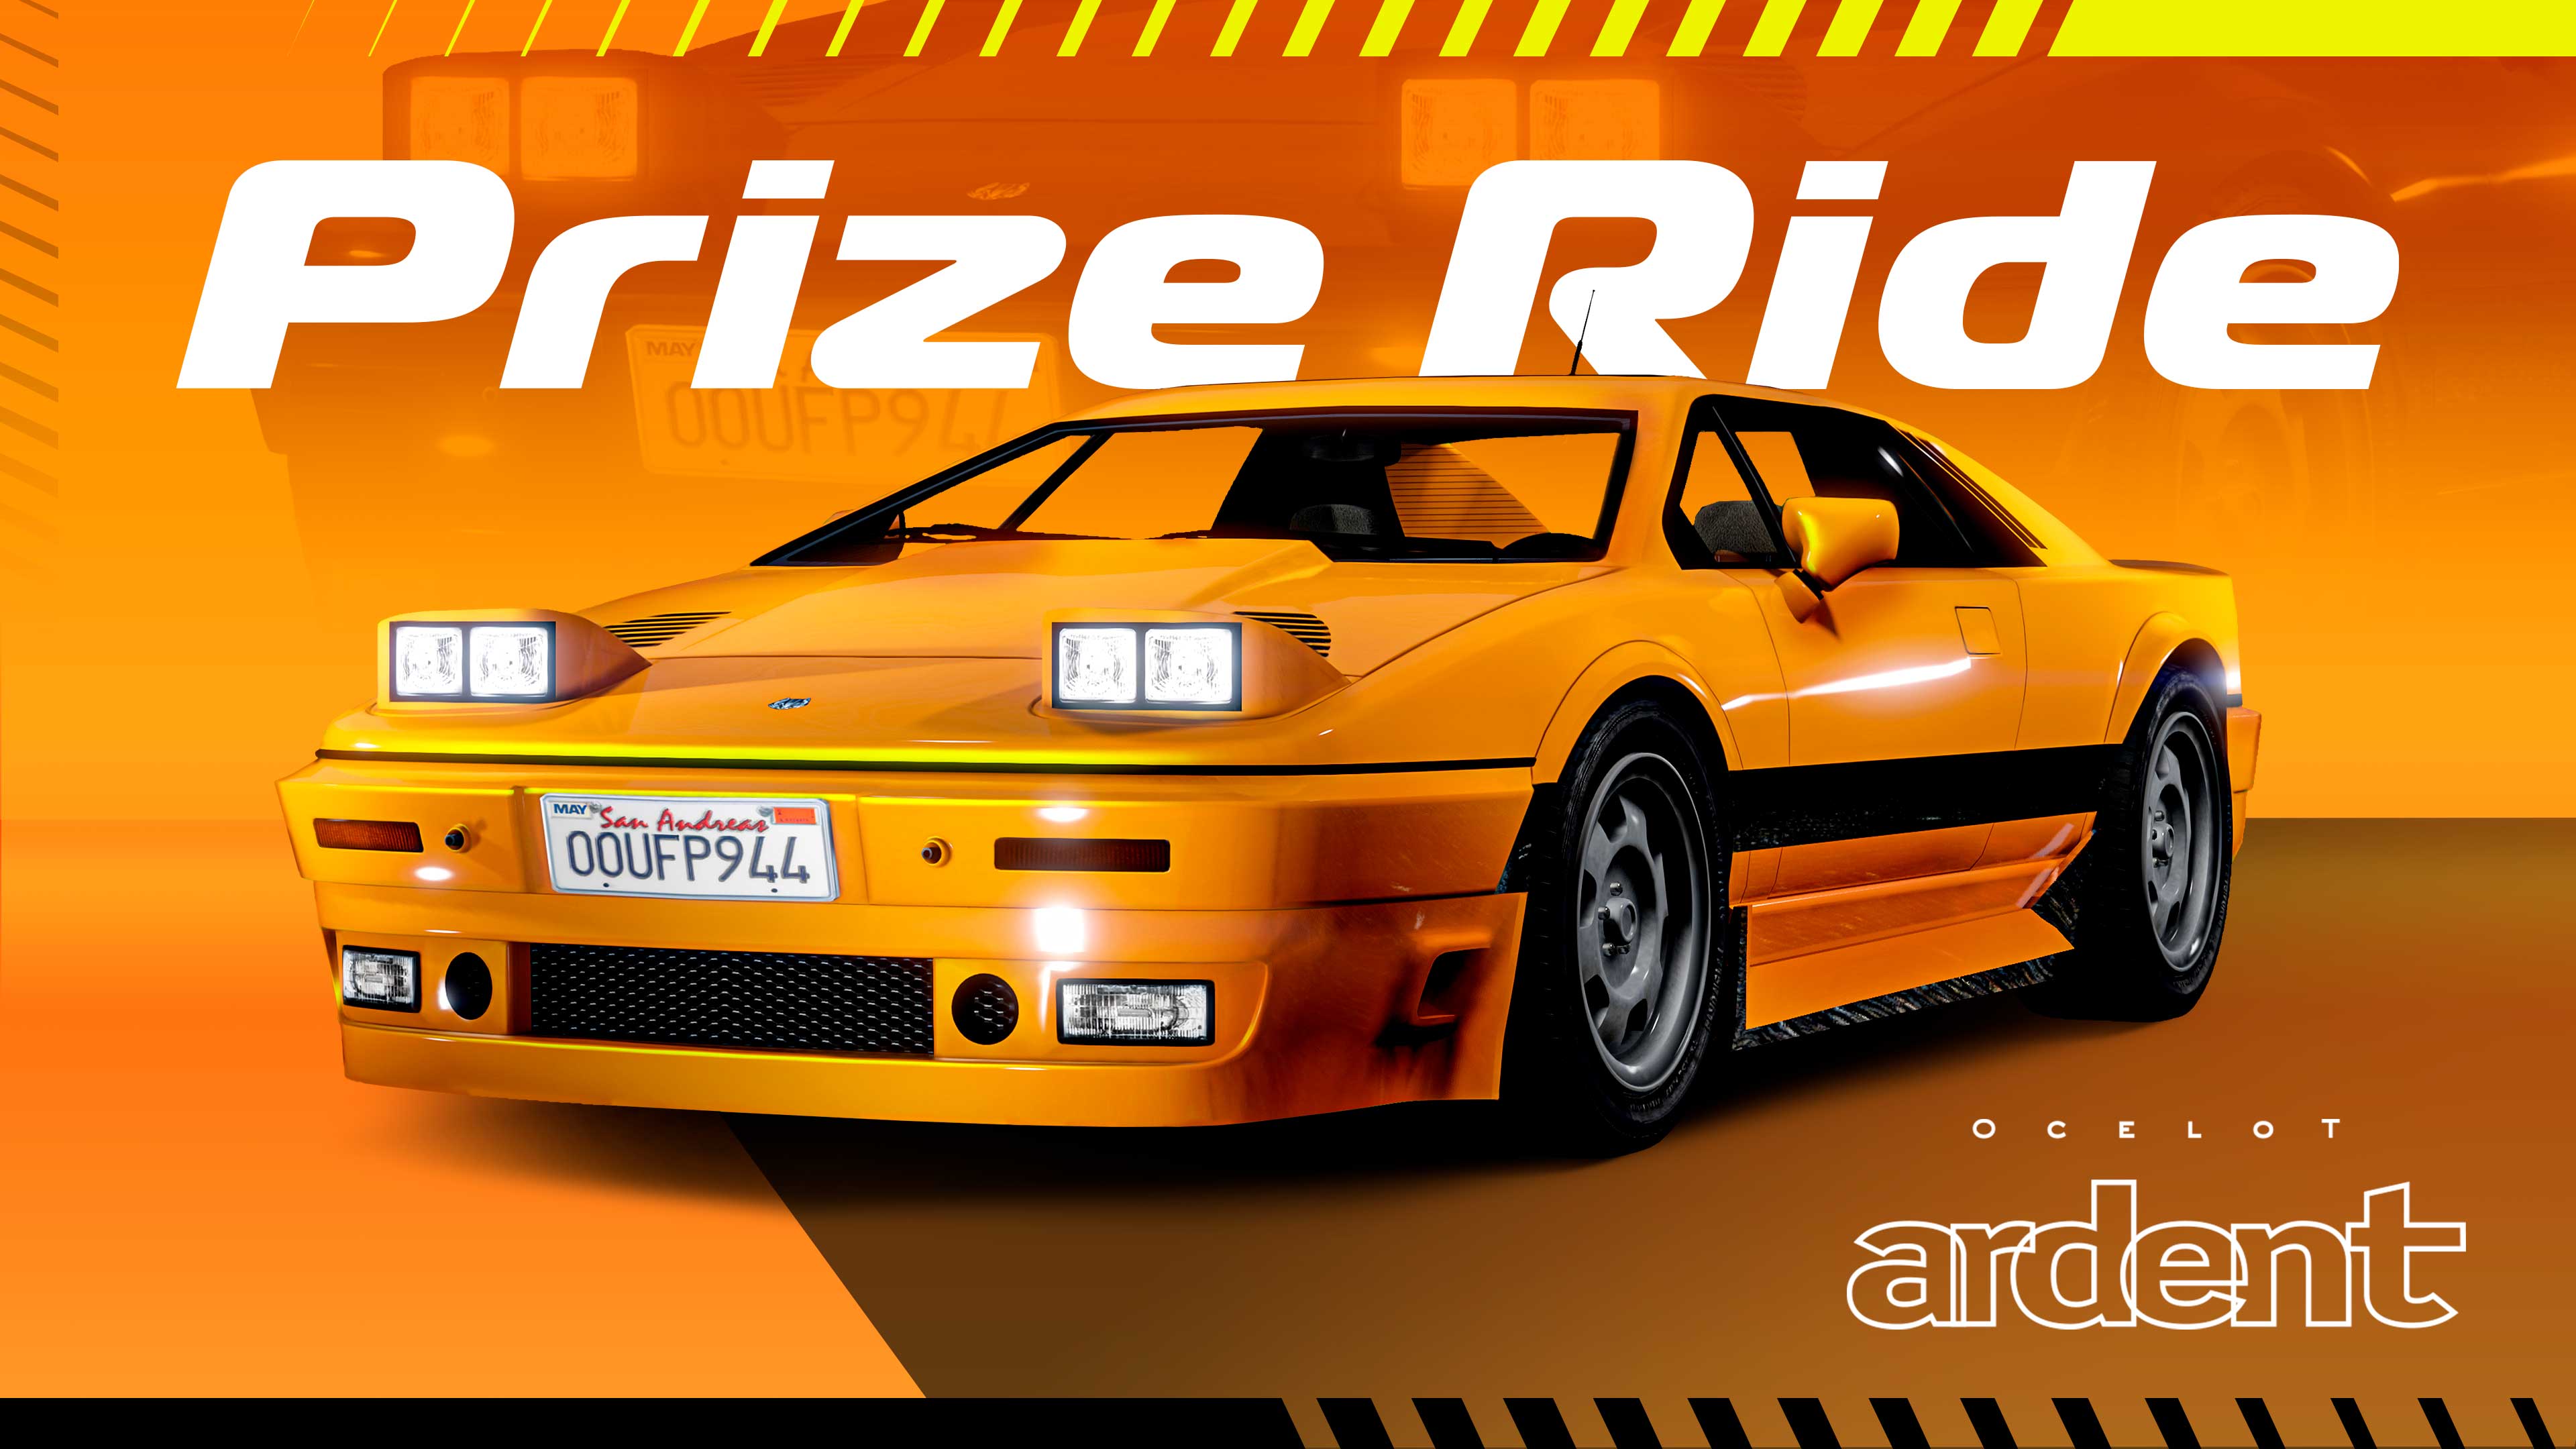 GTA Online Weekly Update 2 December LIVE: Prize Ride, podium